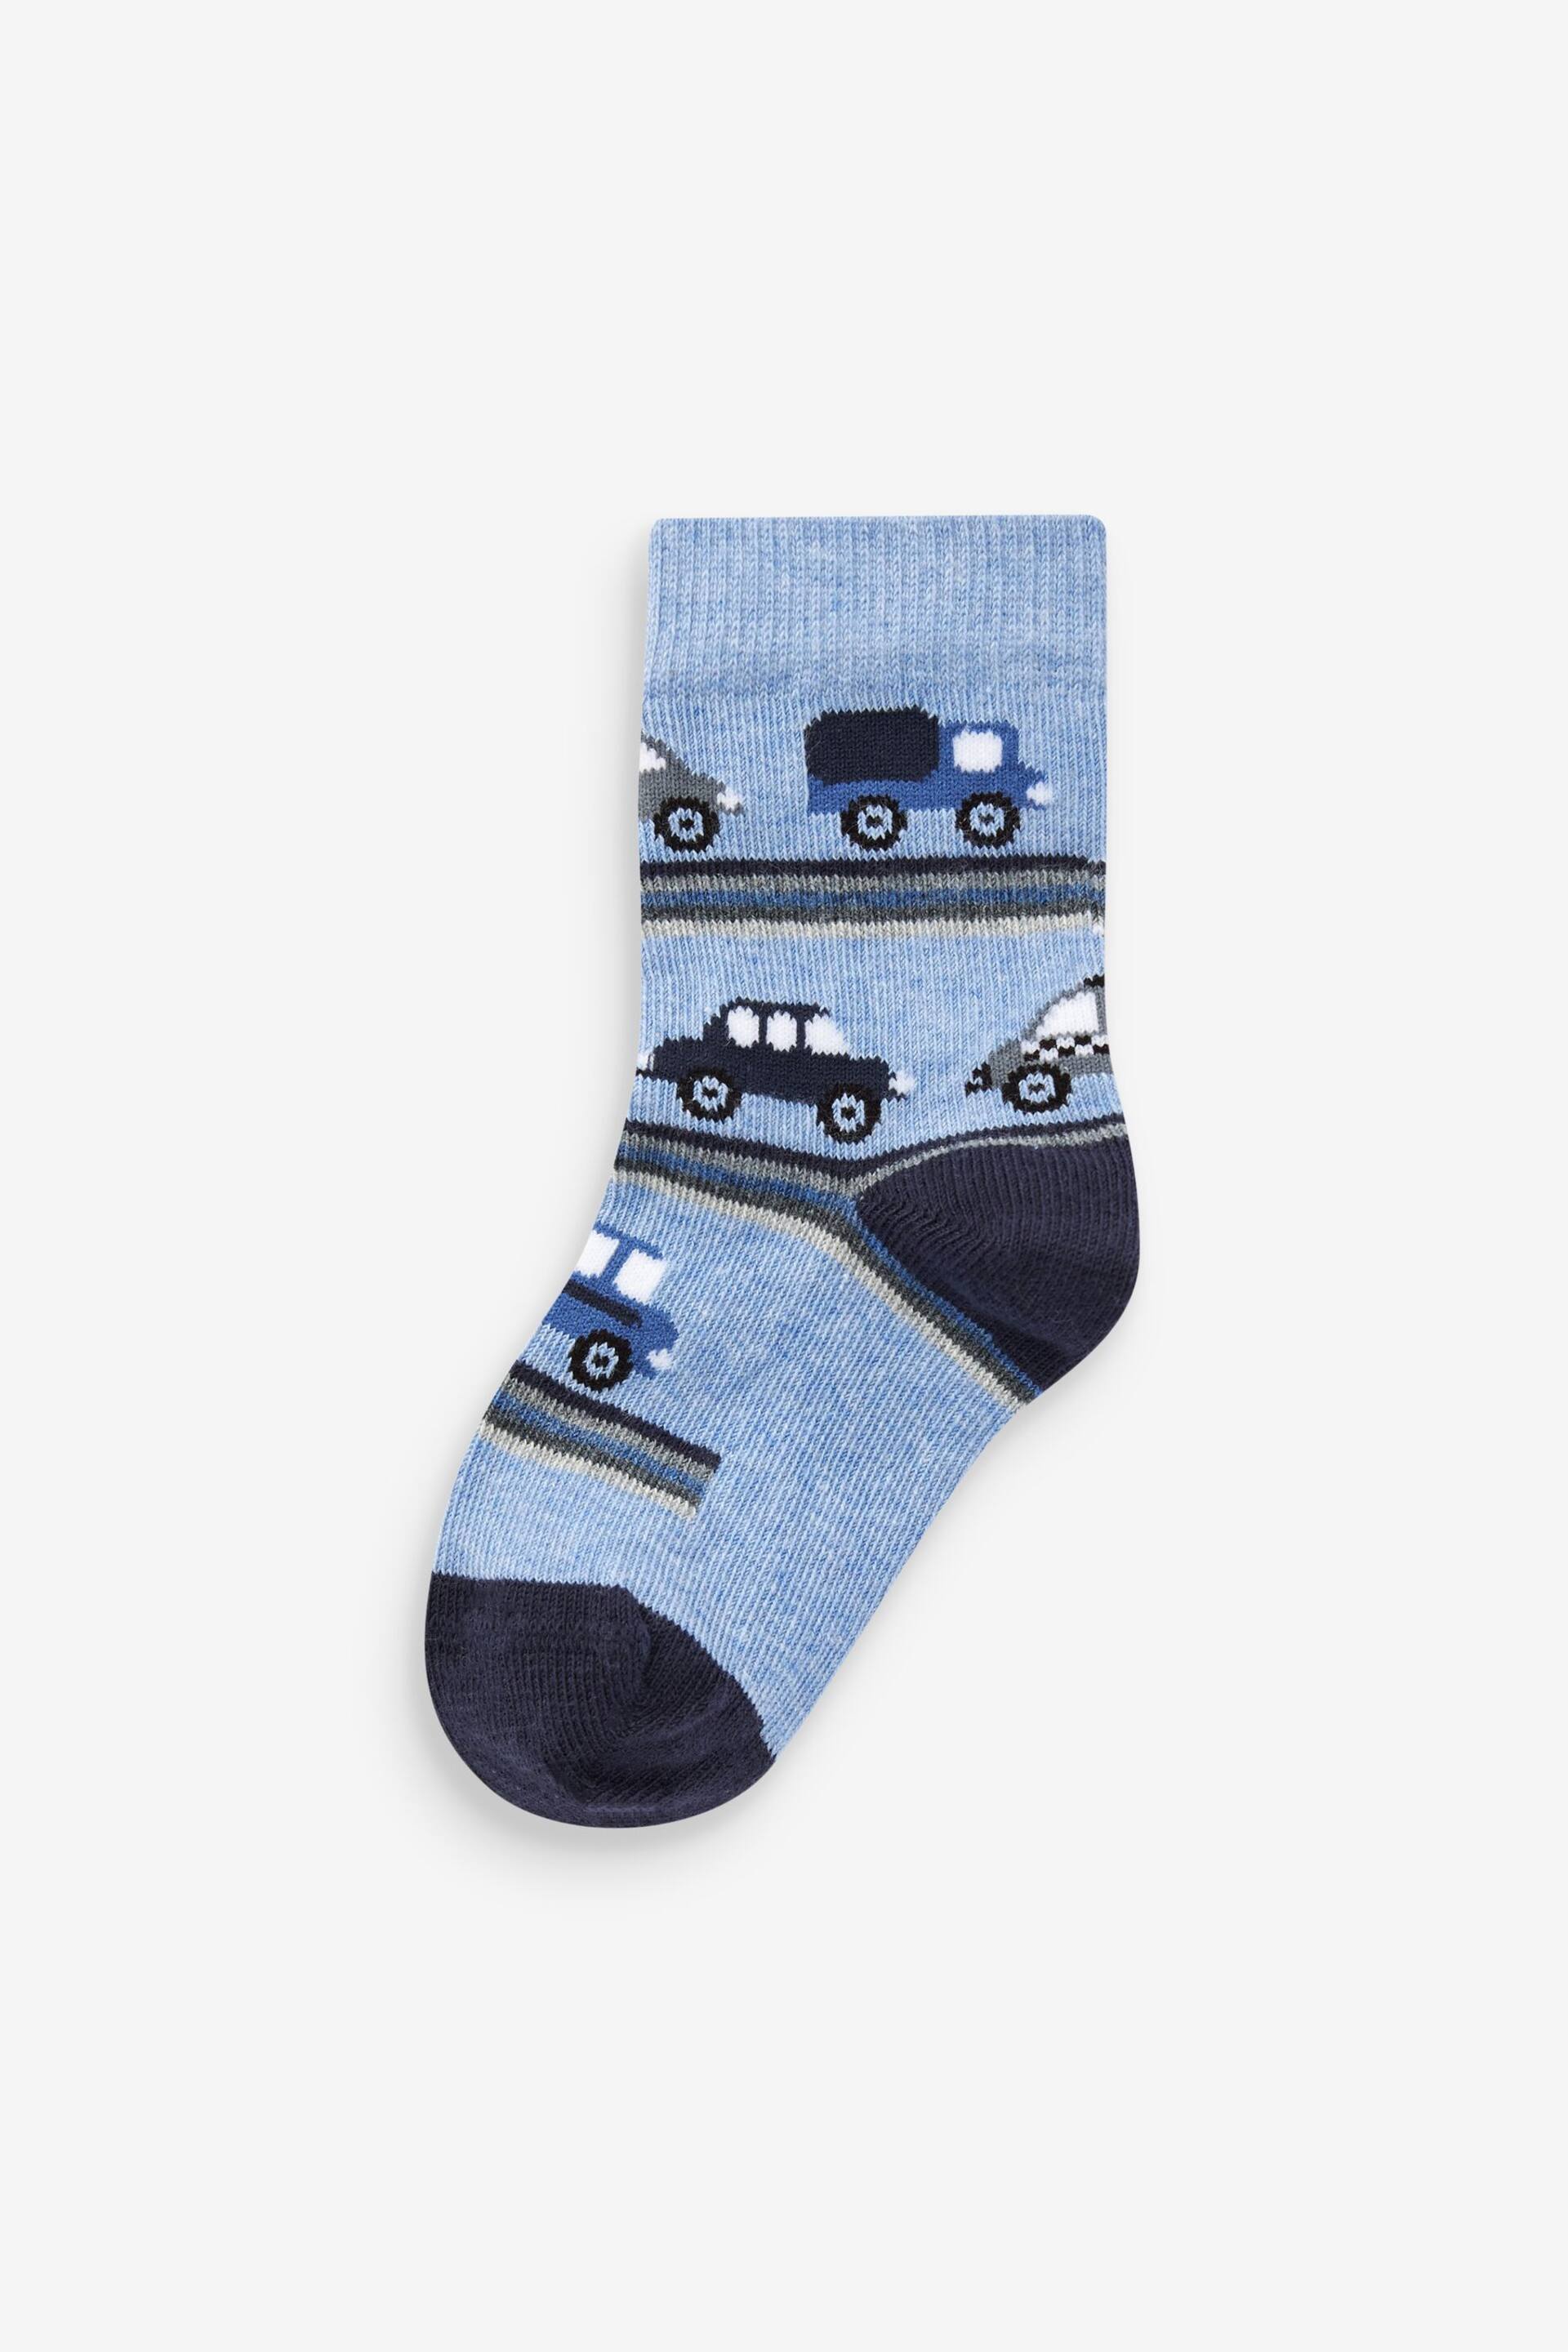 Blue Stripes/Transport Cotton Rich Socks 7 Pack - Image 6 of 8